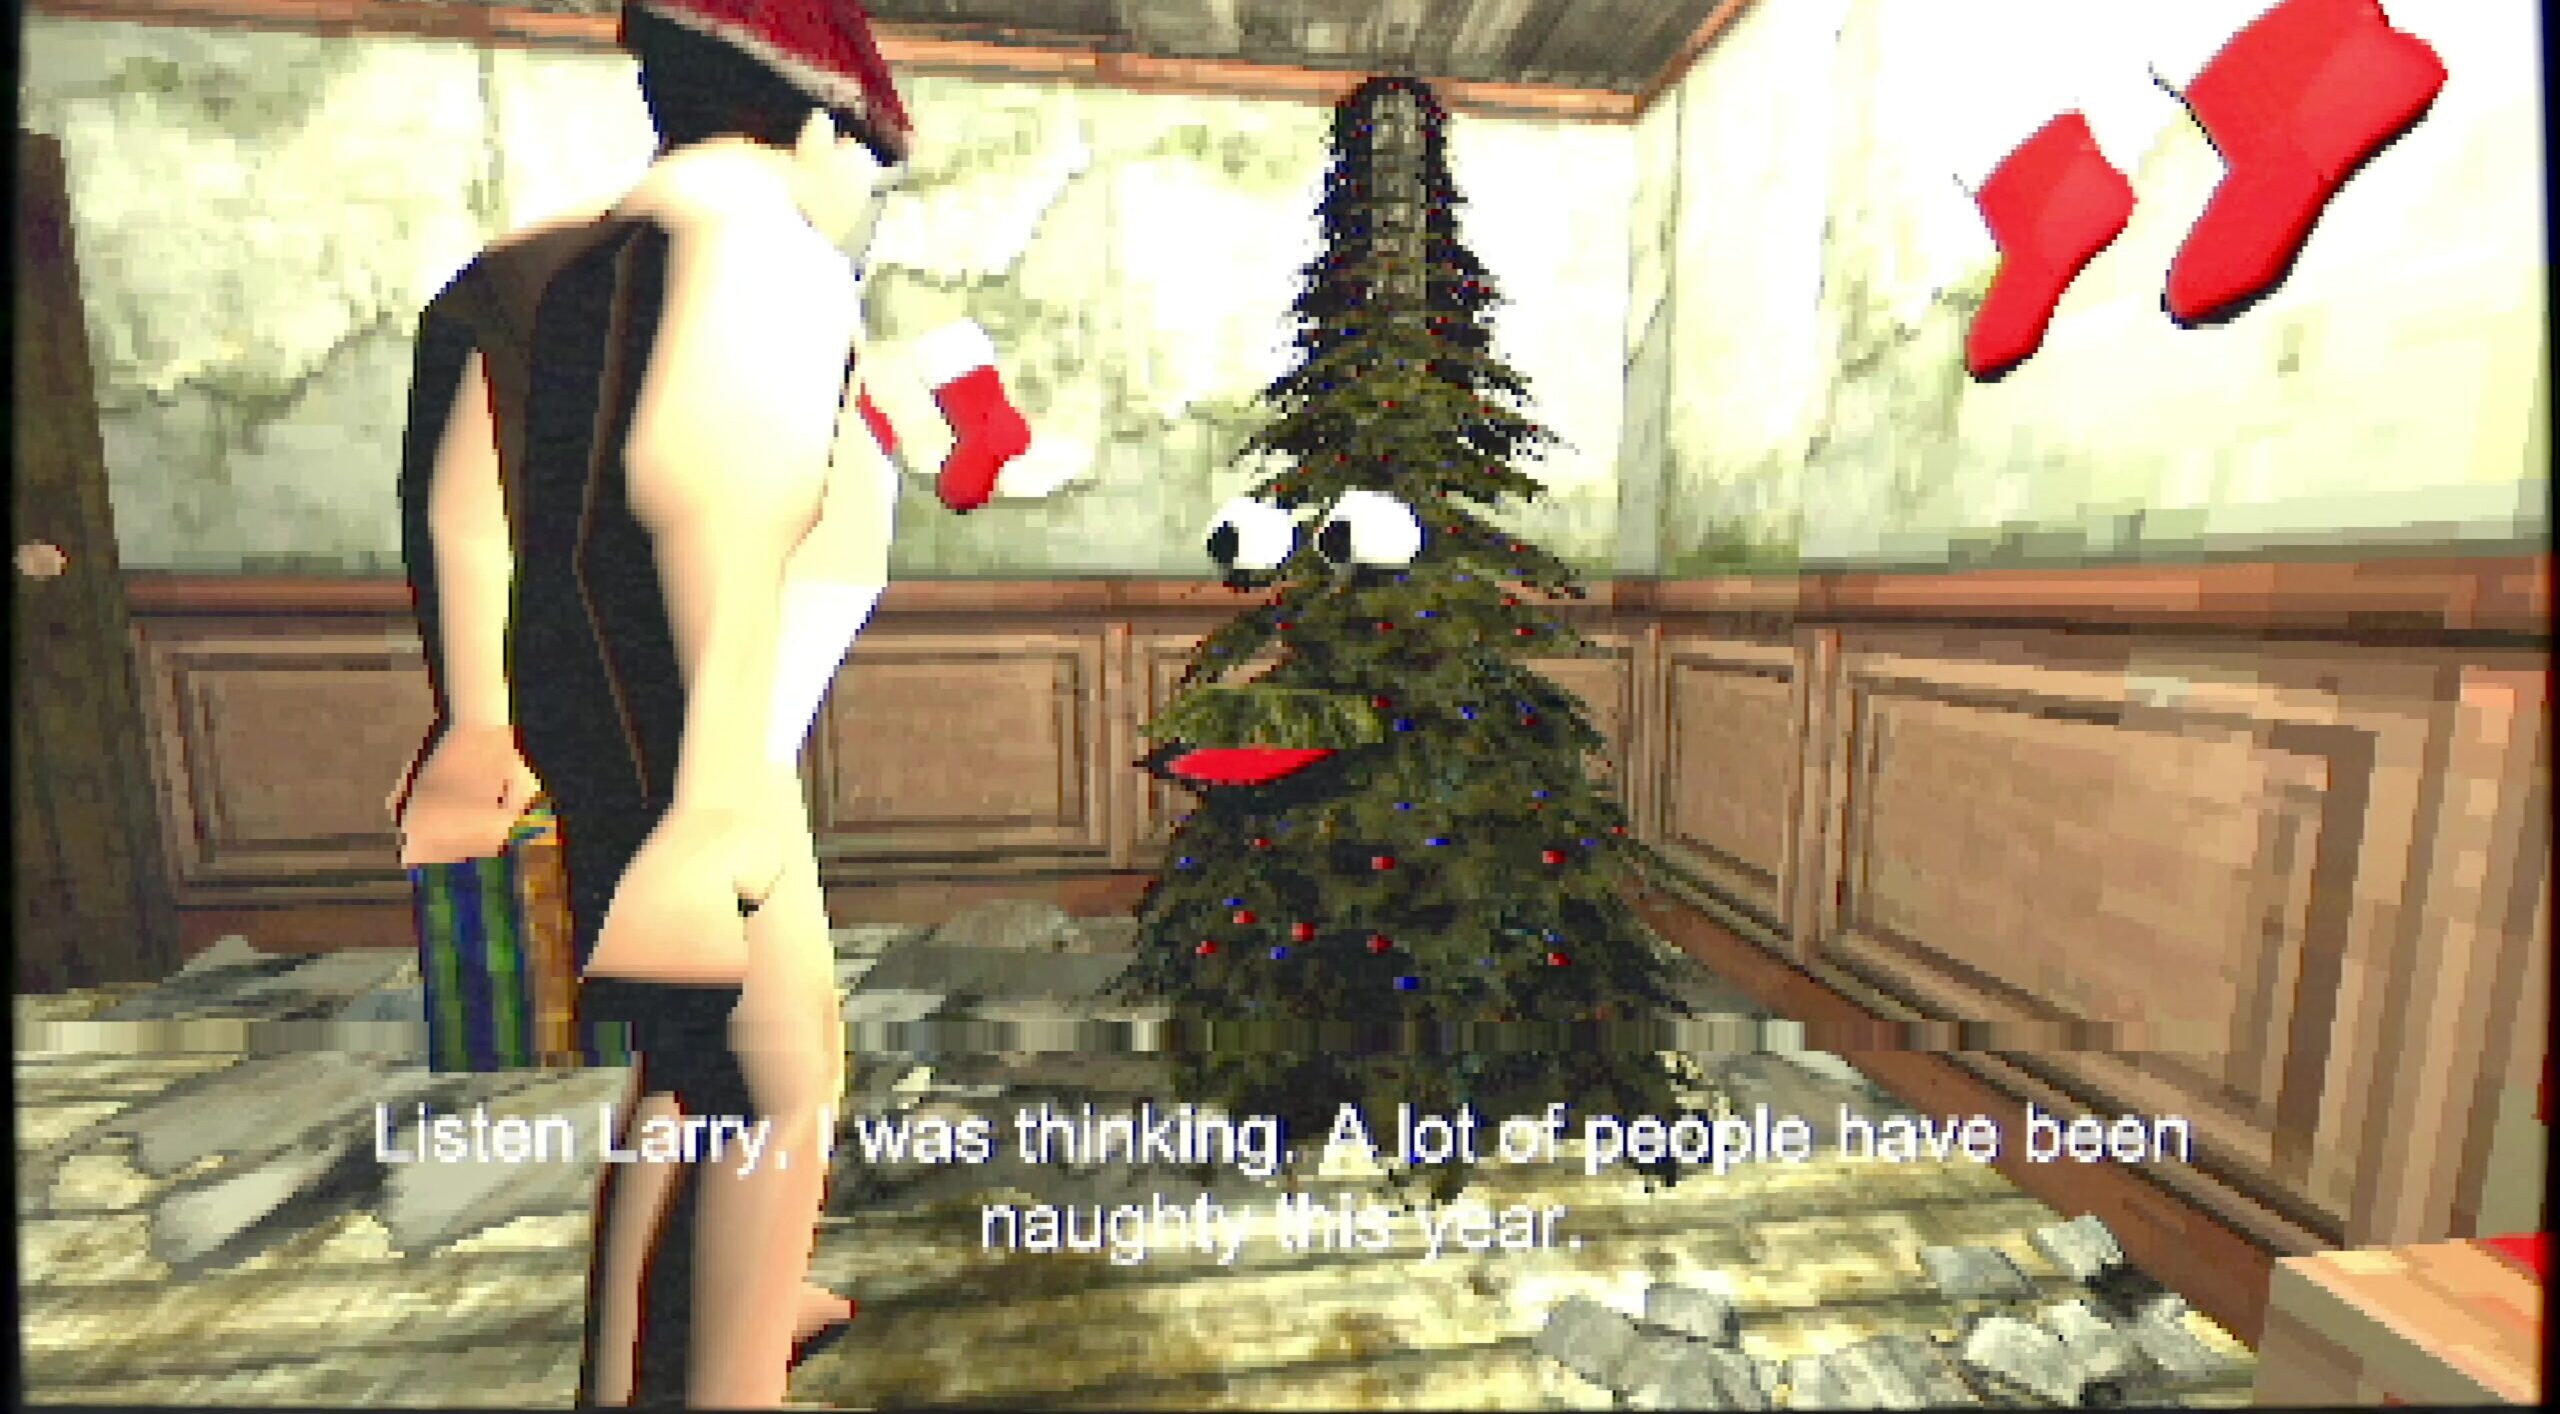 Larry’s Christmas tree